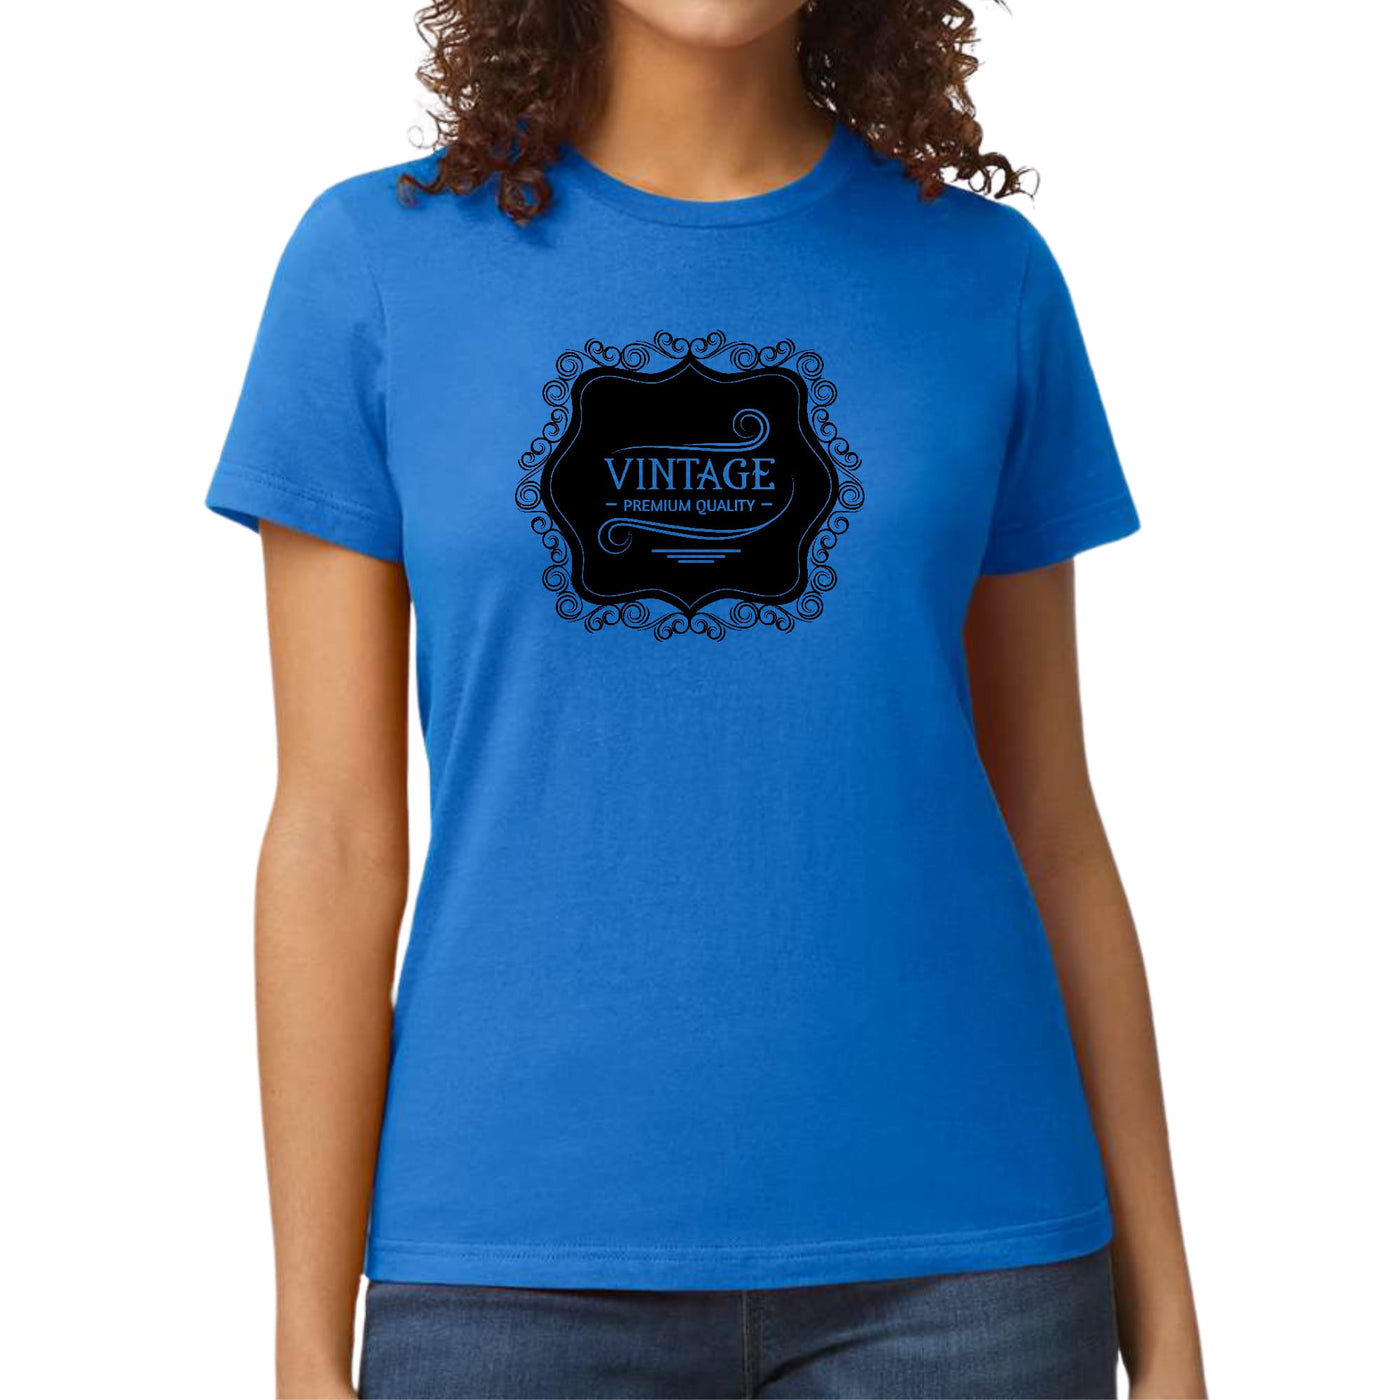 Womens Graphic T - shirt Vintage Premium Quality Black Illustration - T - Shirts